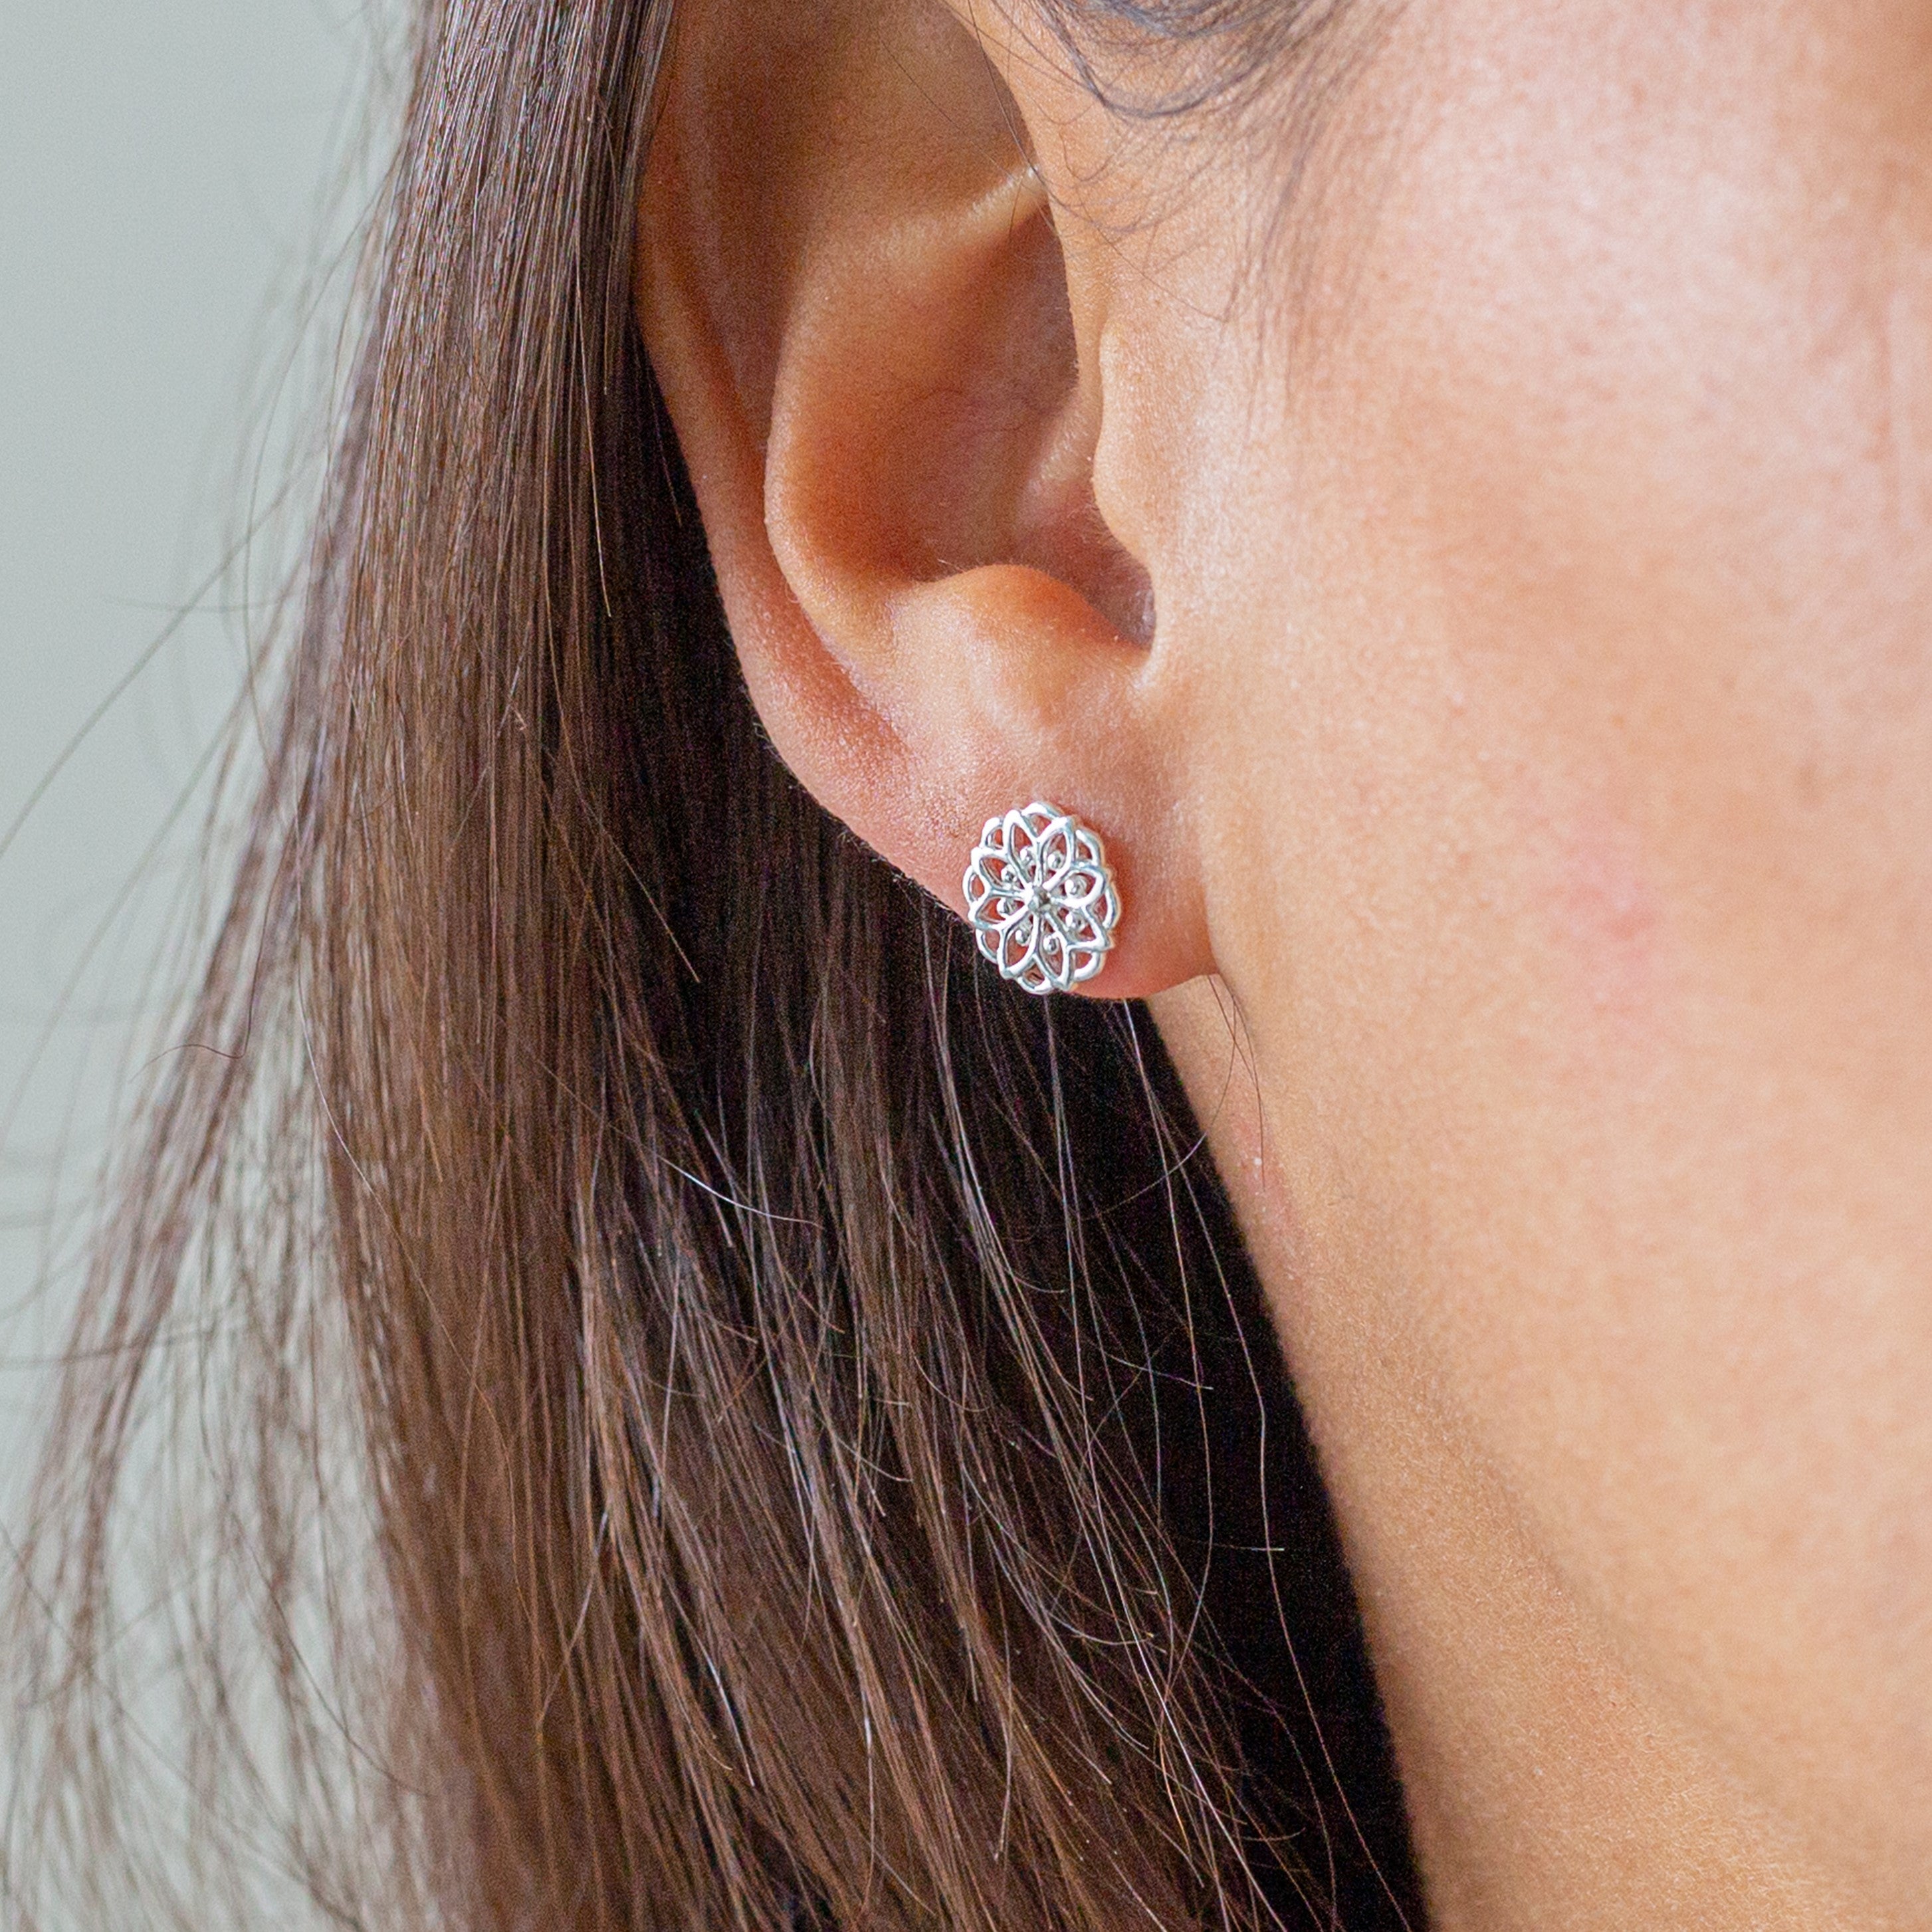 Nazca Lines Mandala Stud Earrings